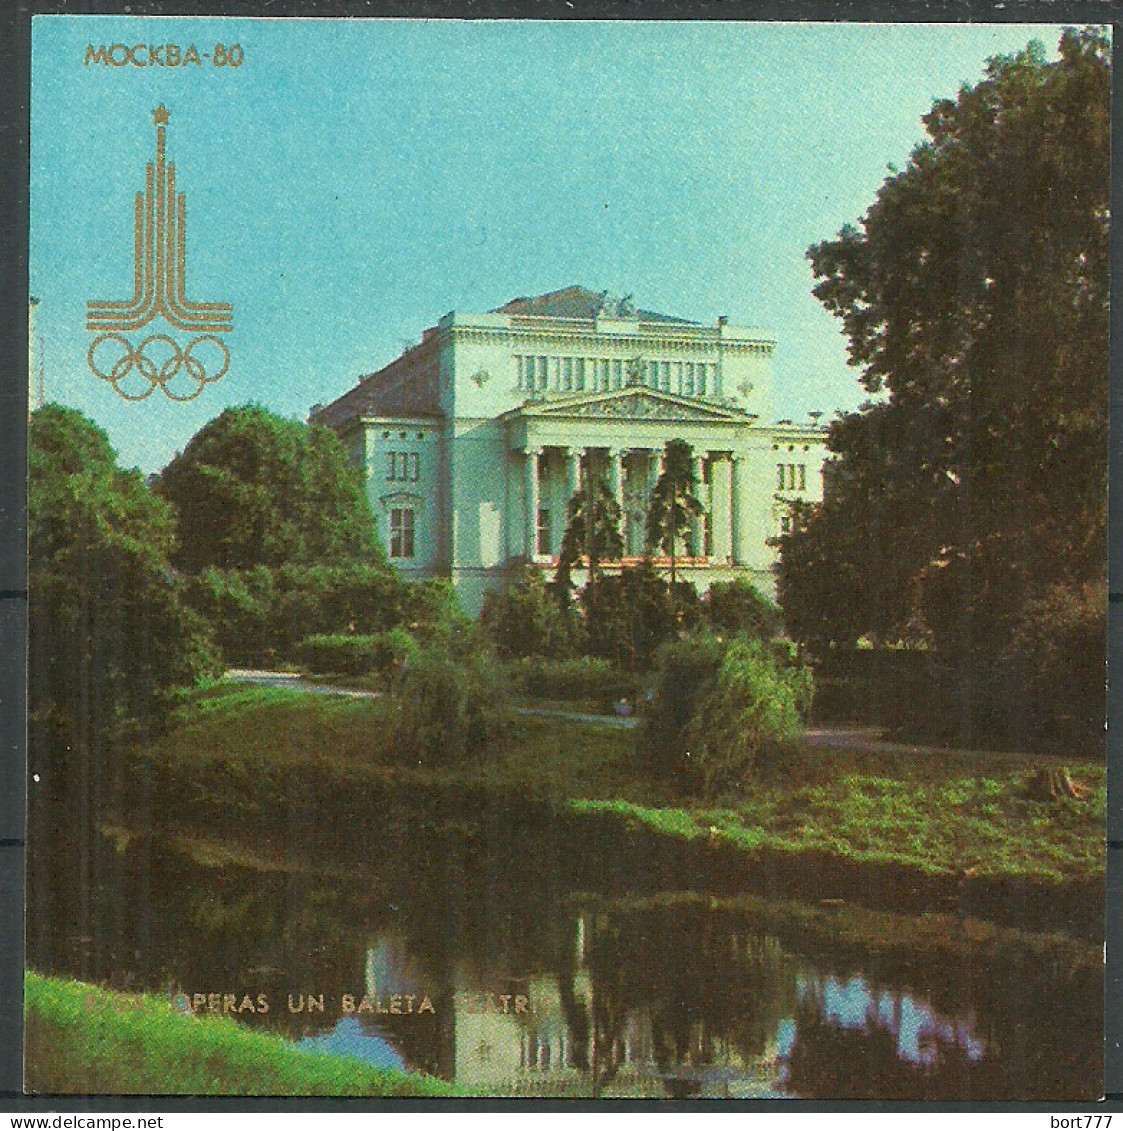 RUSSIA Latvia 1978 Special Matchbox Label 93x93 Mm (catalog # 392) - Cajas De Cerillas - Etiquetas